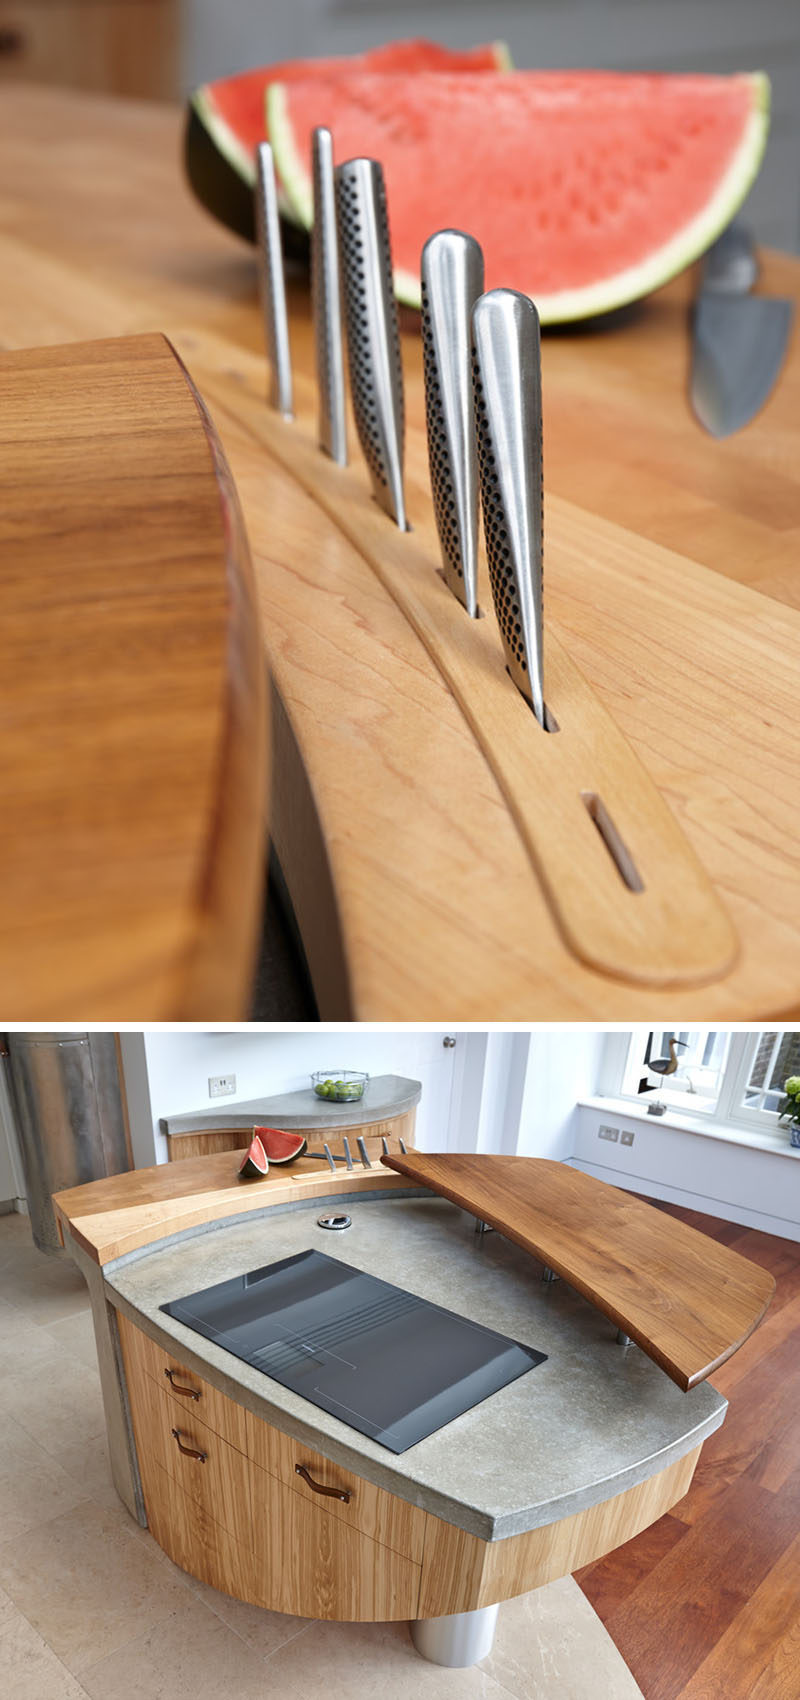 Kitchen Design Idea - Include A Built-In Knife Block